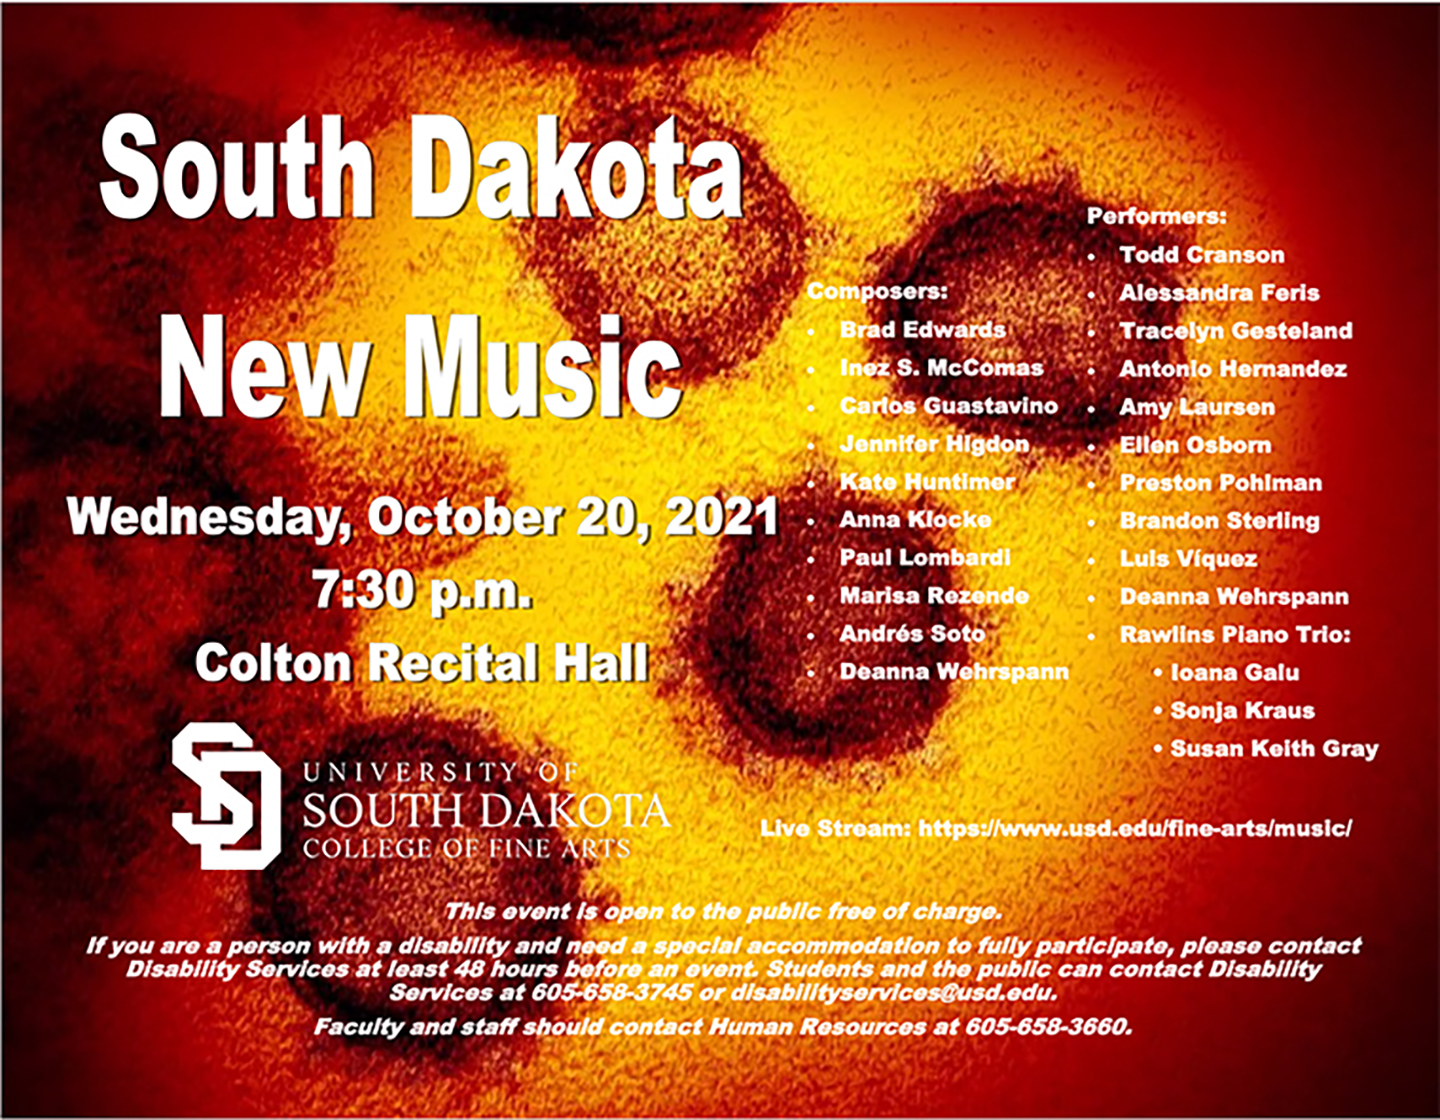 South Dakota New Music presents music written for the world